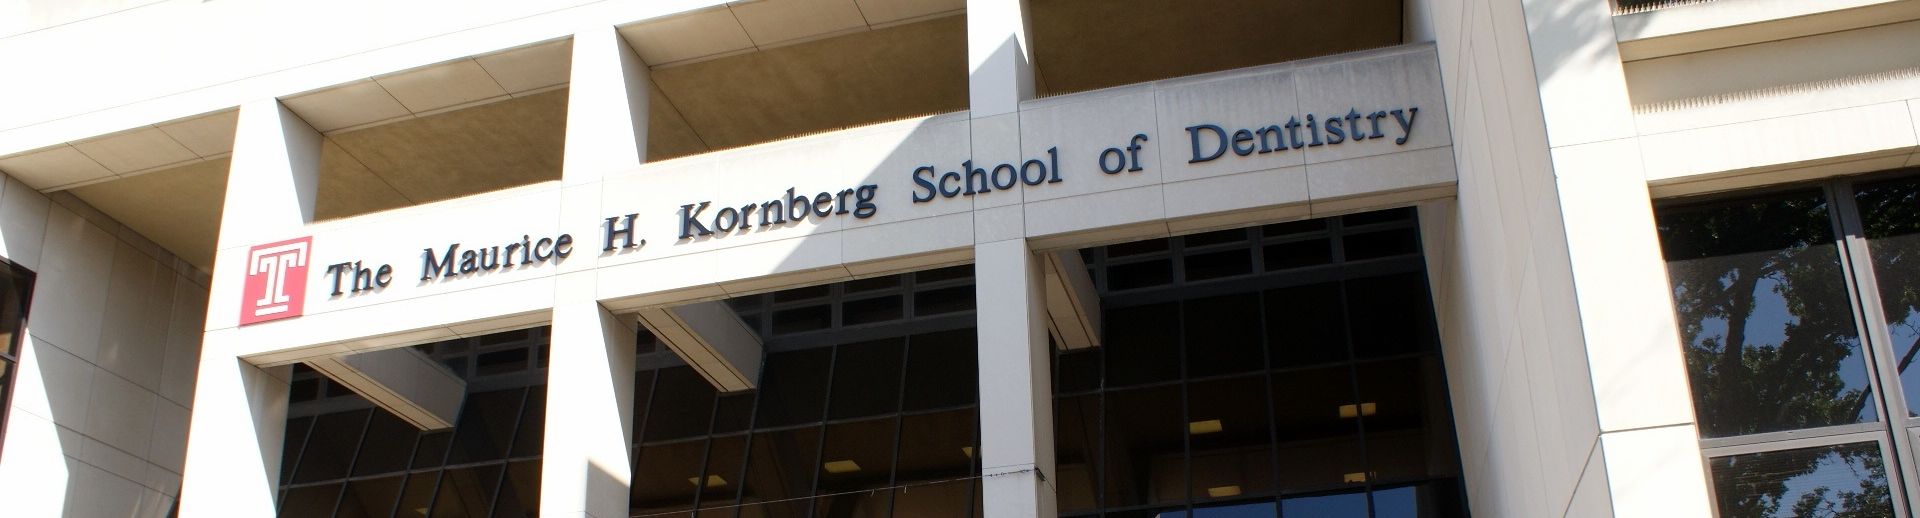 The entrance to the Kornberg School of Dentistry.